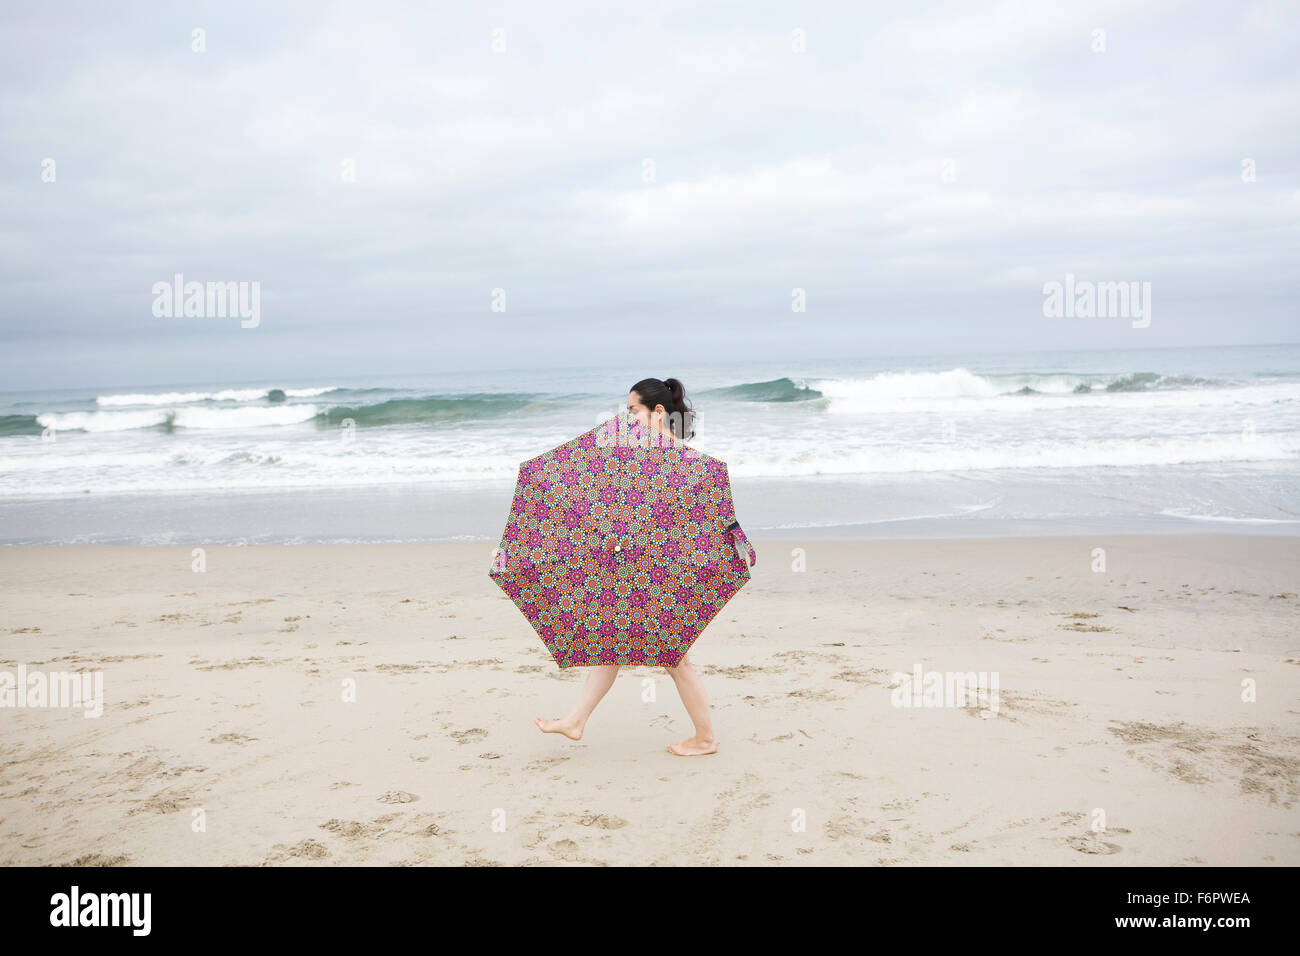 Woman walking with umbrella on beach Stock Photo